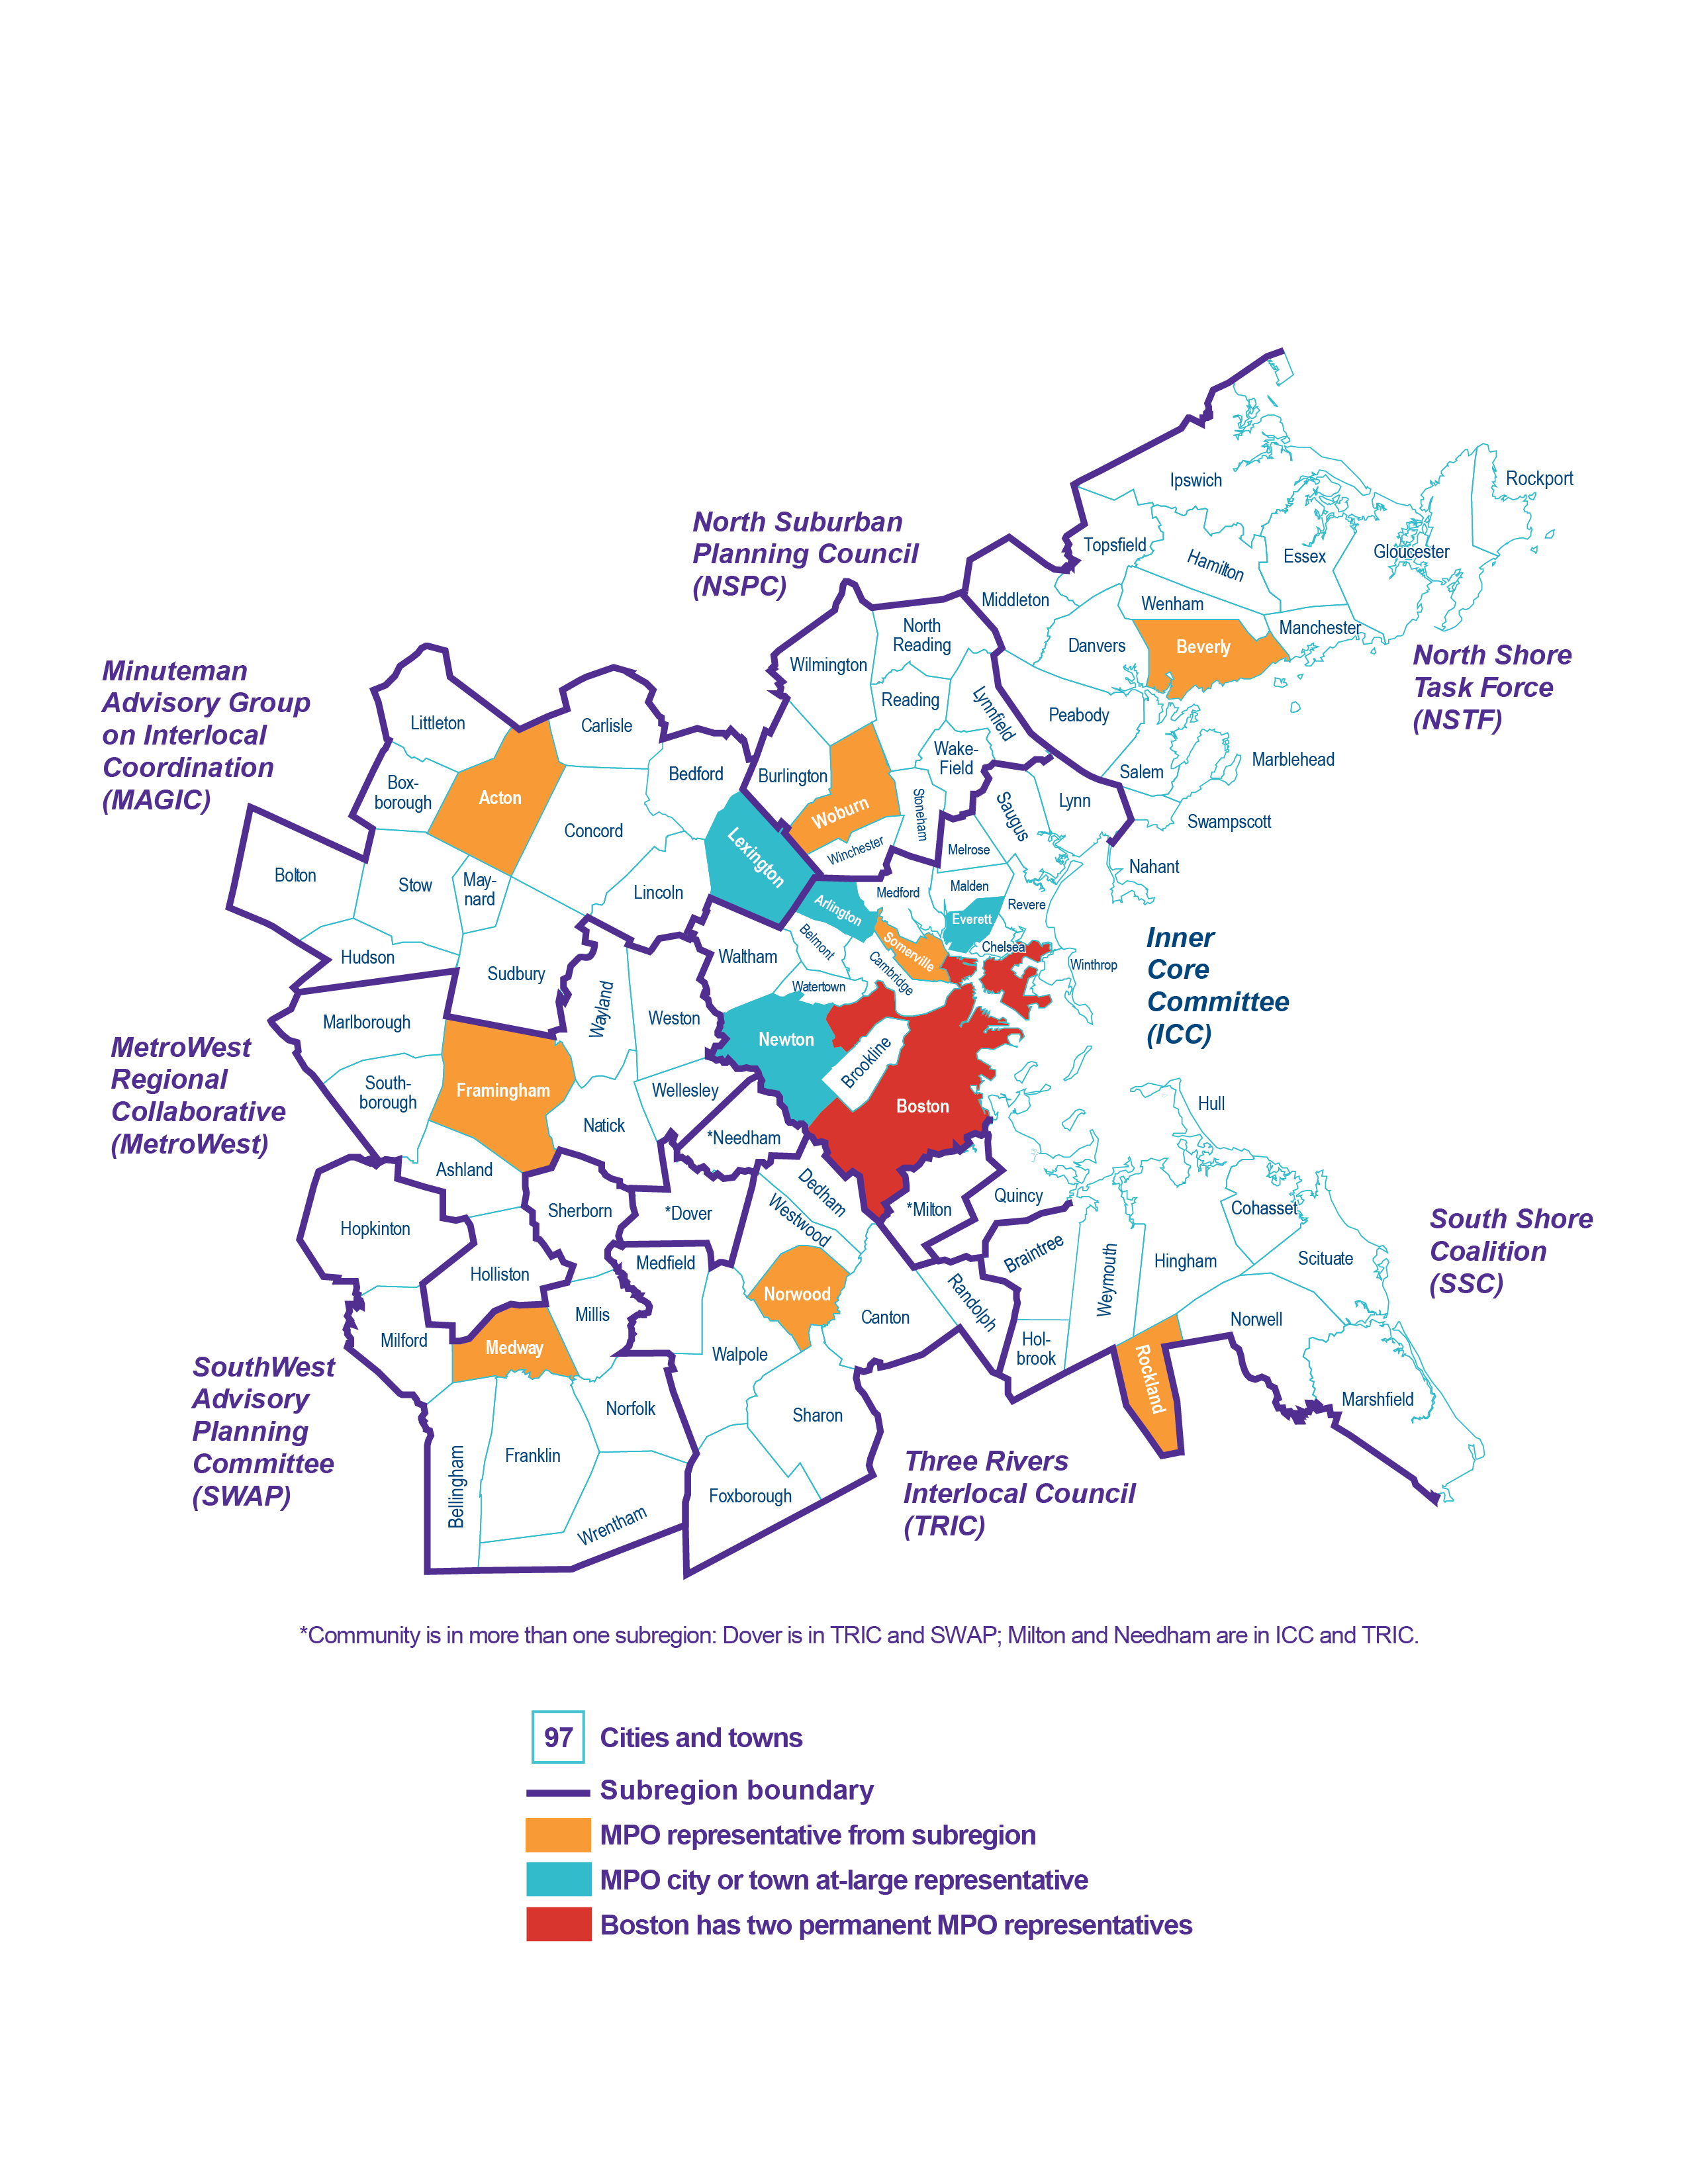 Map of the Boston Region MPO's municipalities showing subregional boundaries and MPO membership representation